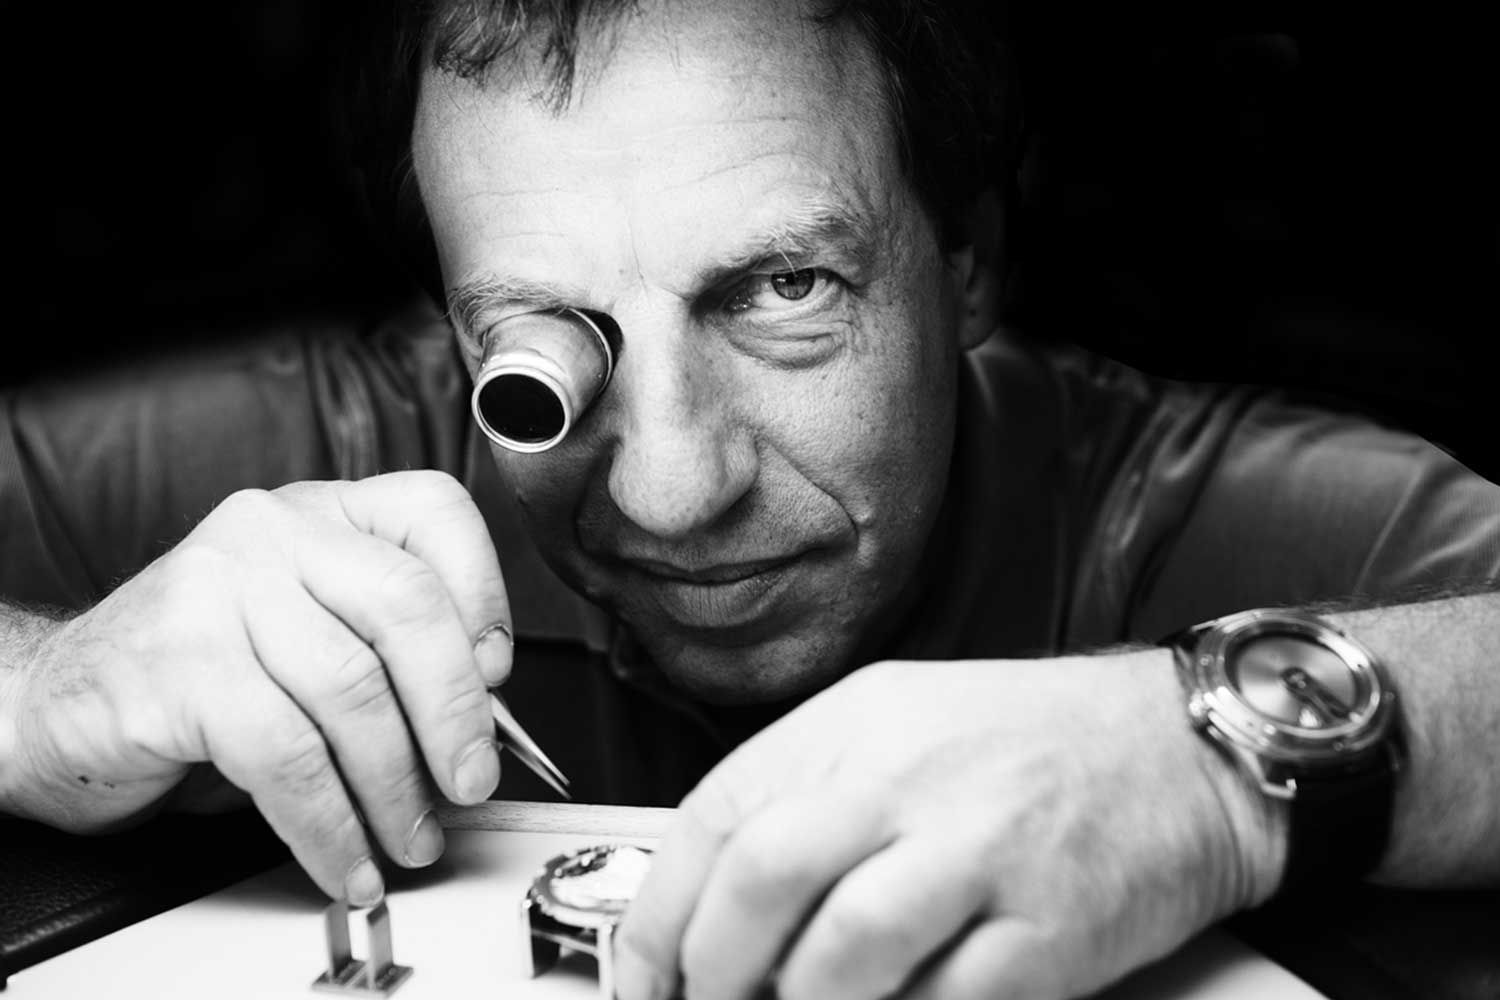 Master watchmaker and co-founder of De Bethune, Denis Flageollet